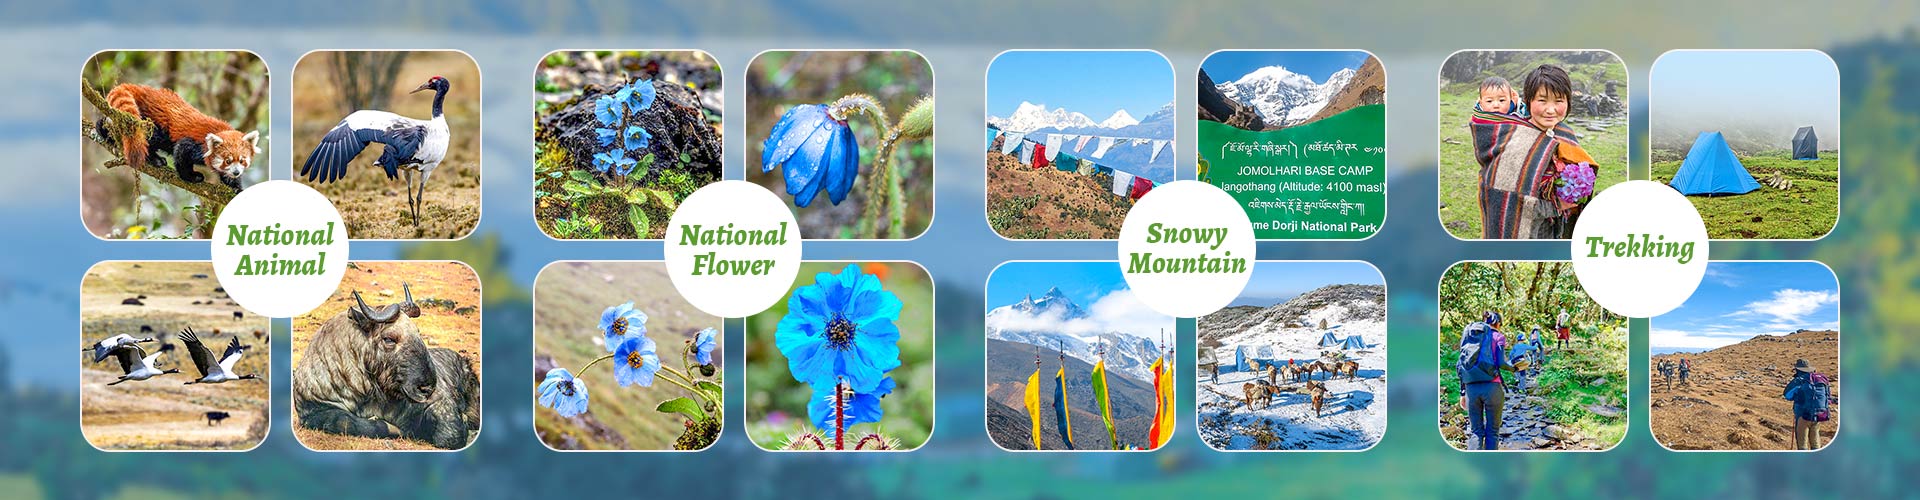 Bhutan Nature Tours